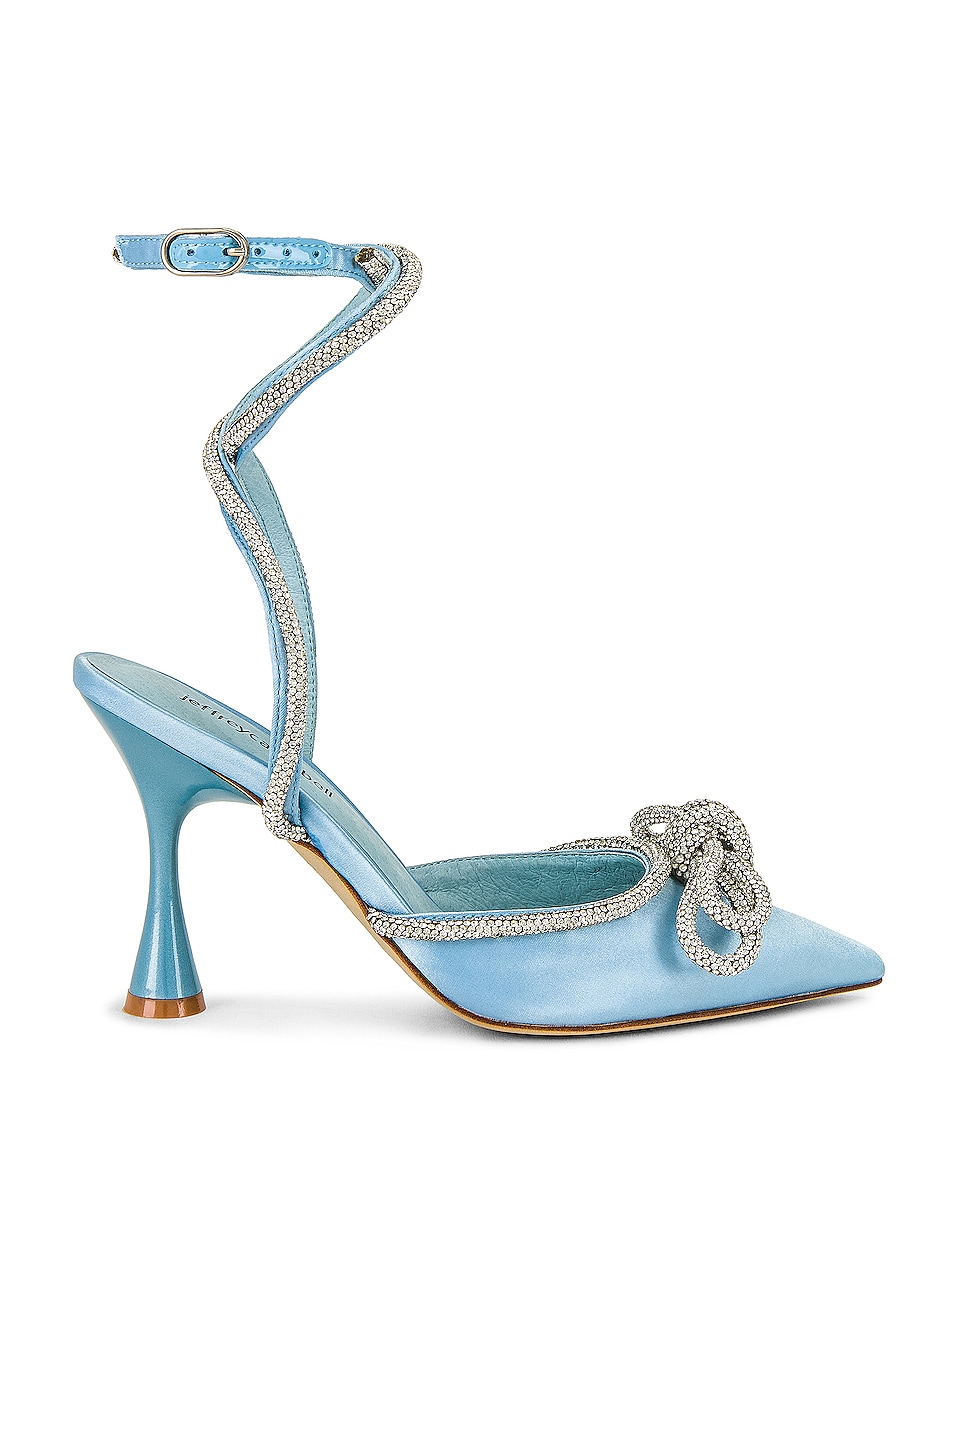 revolve.com | XREVOLVE Apresdouze Heel in Baby Blue & Silver